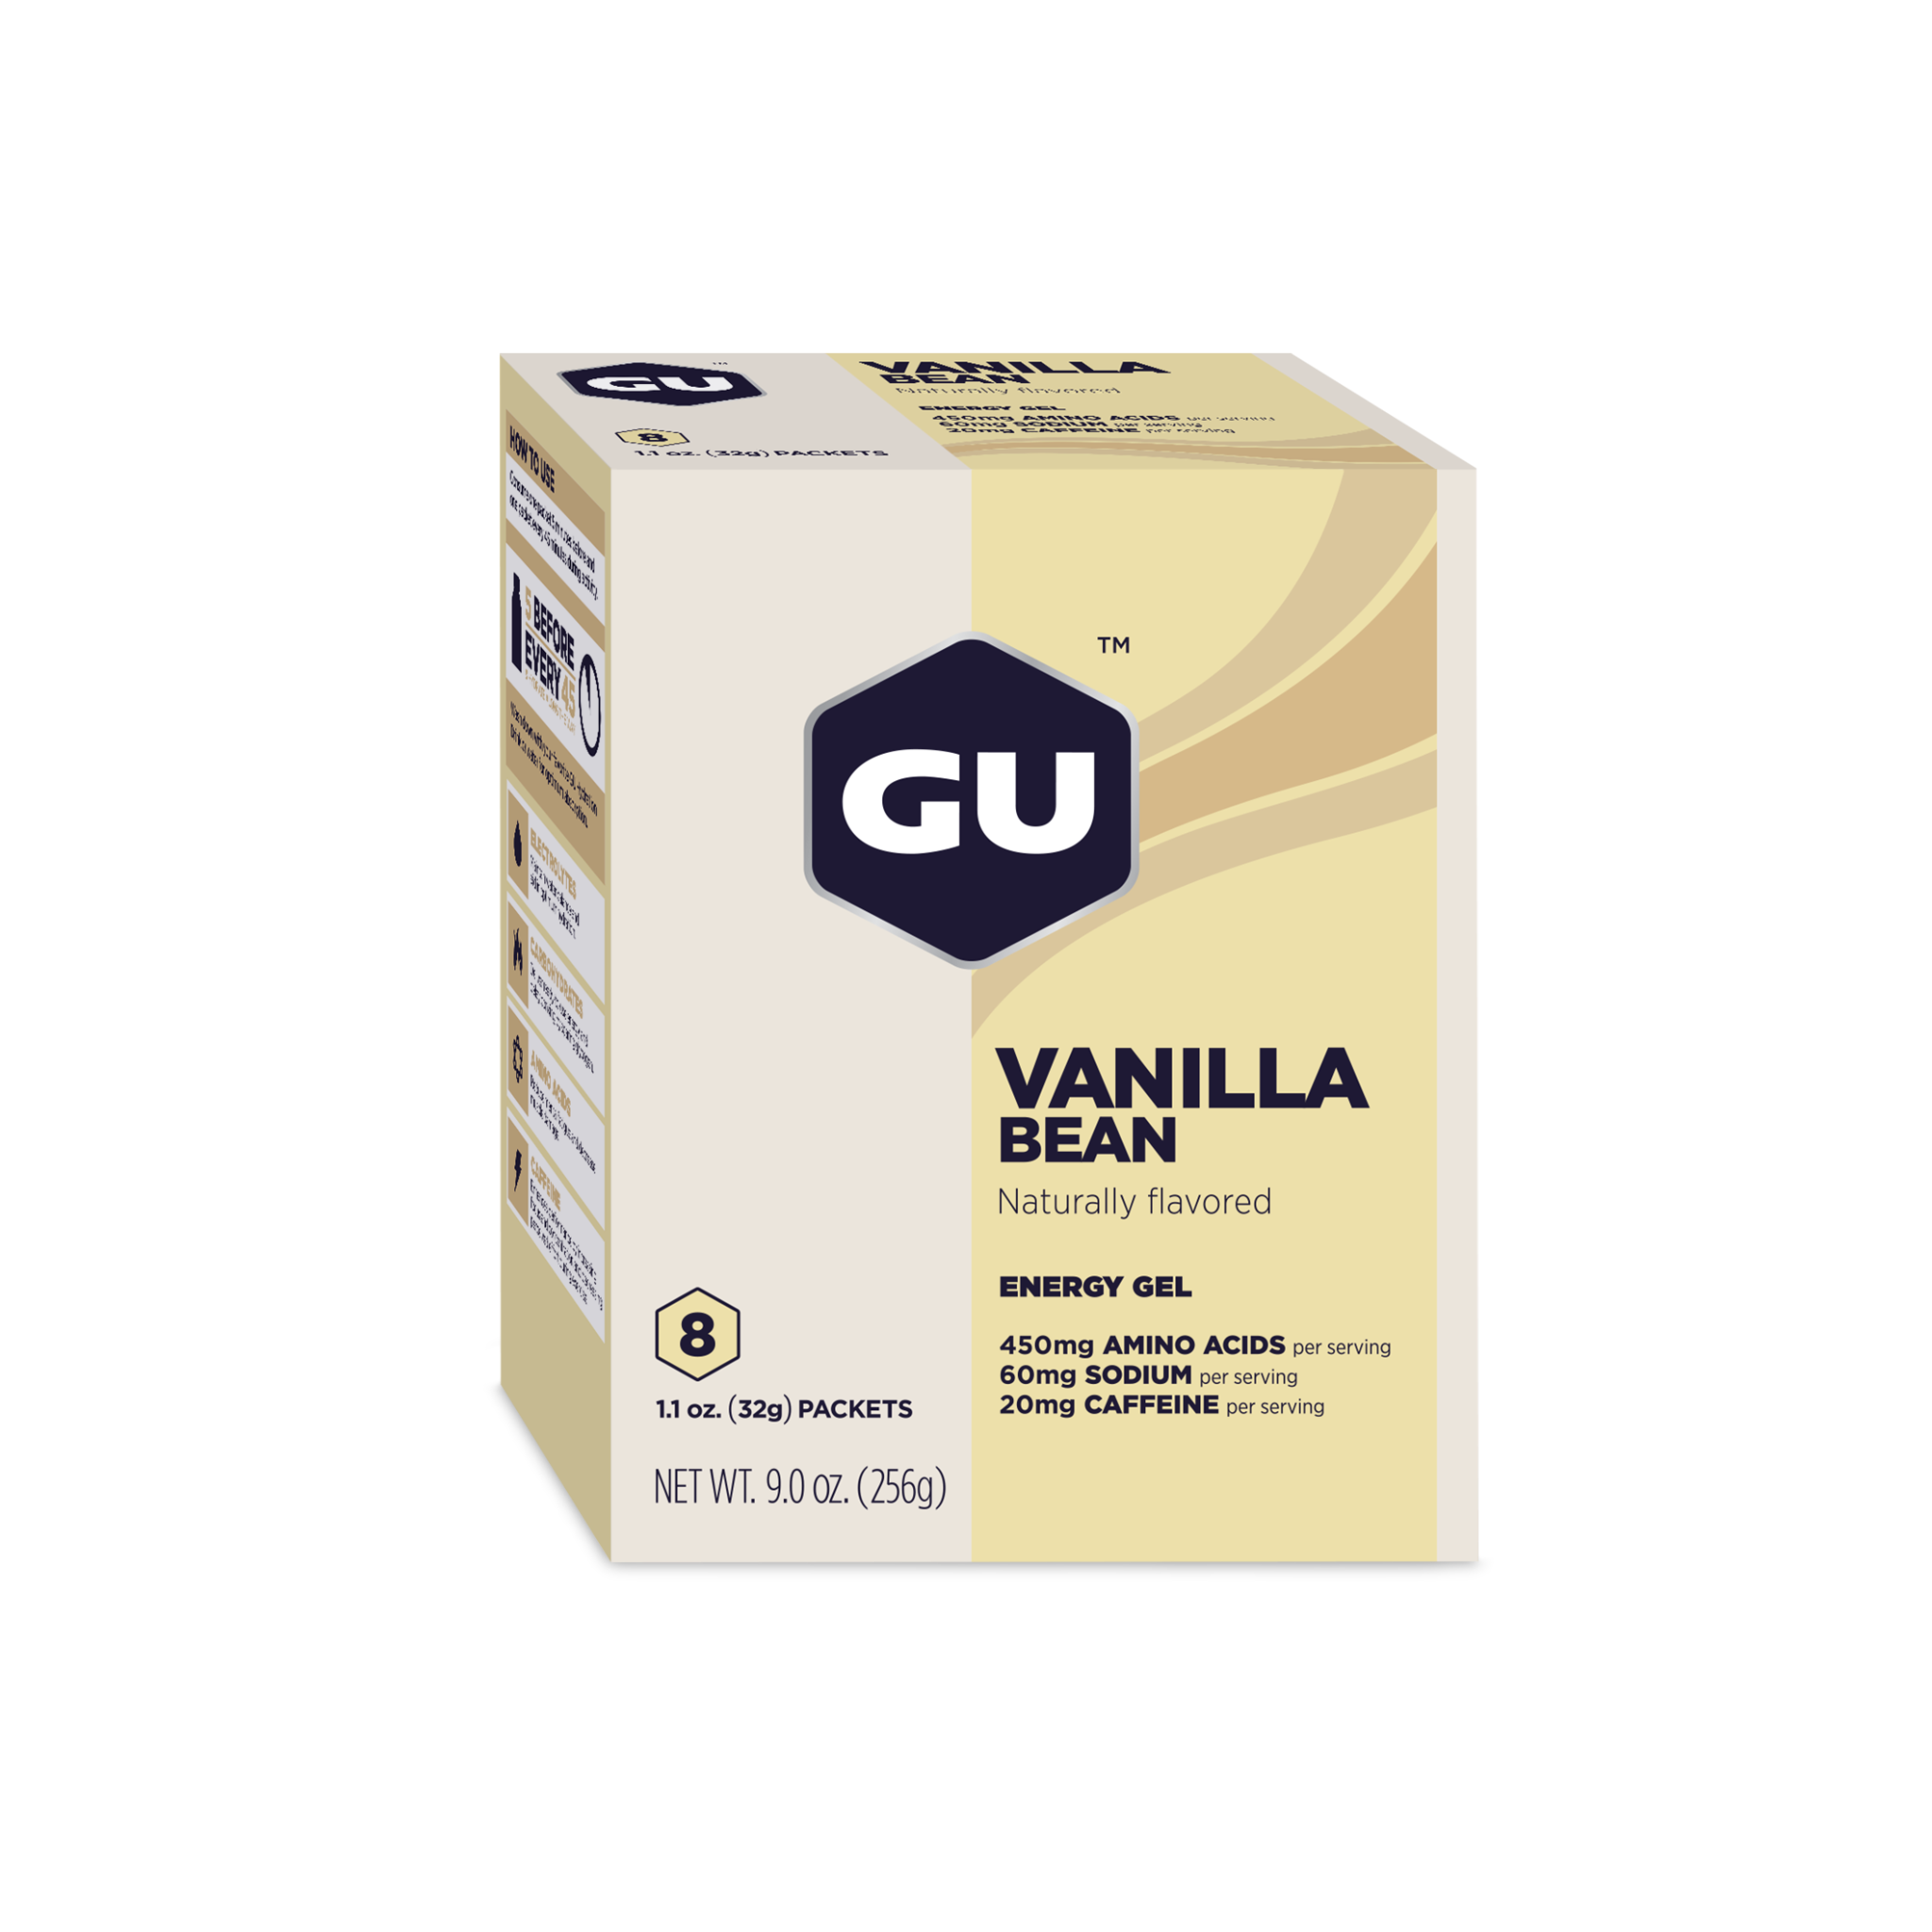 gu energy gel 8 pack box CHOCOLATE OUTRAGE